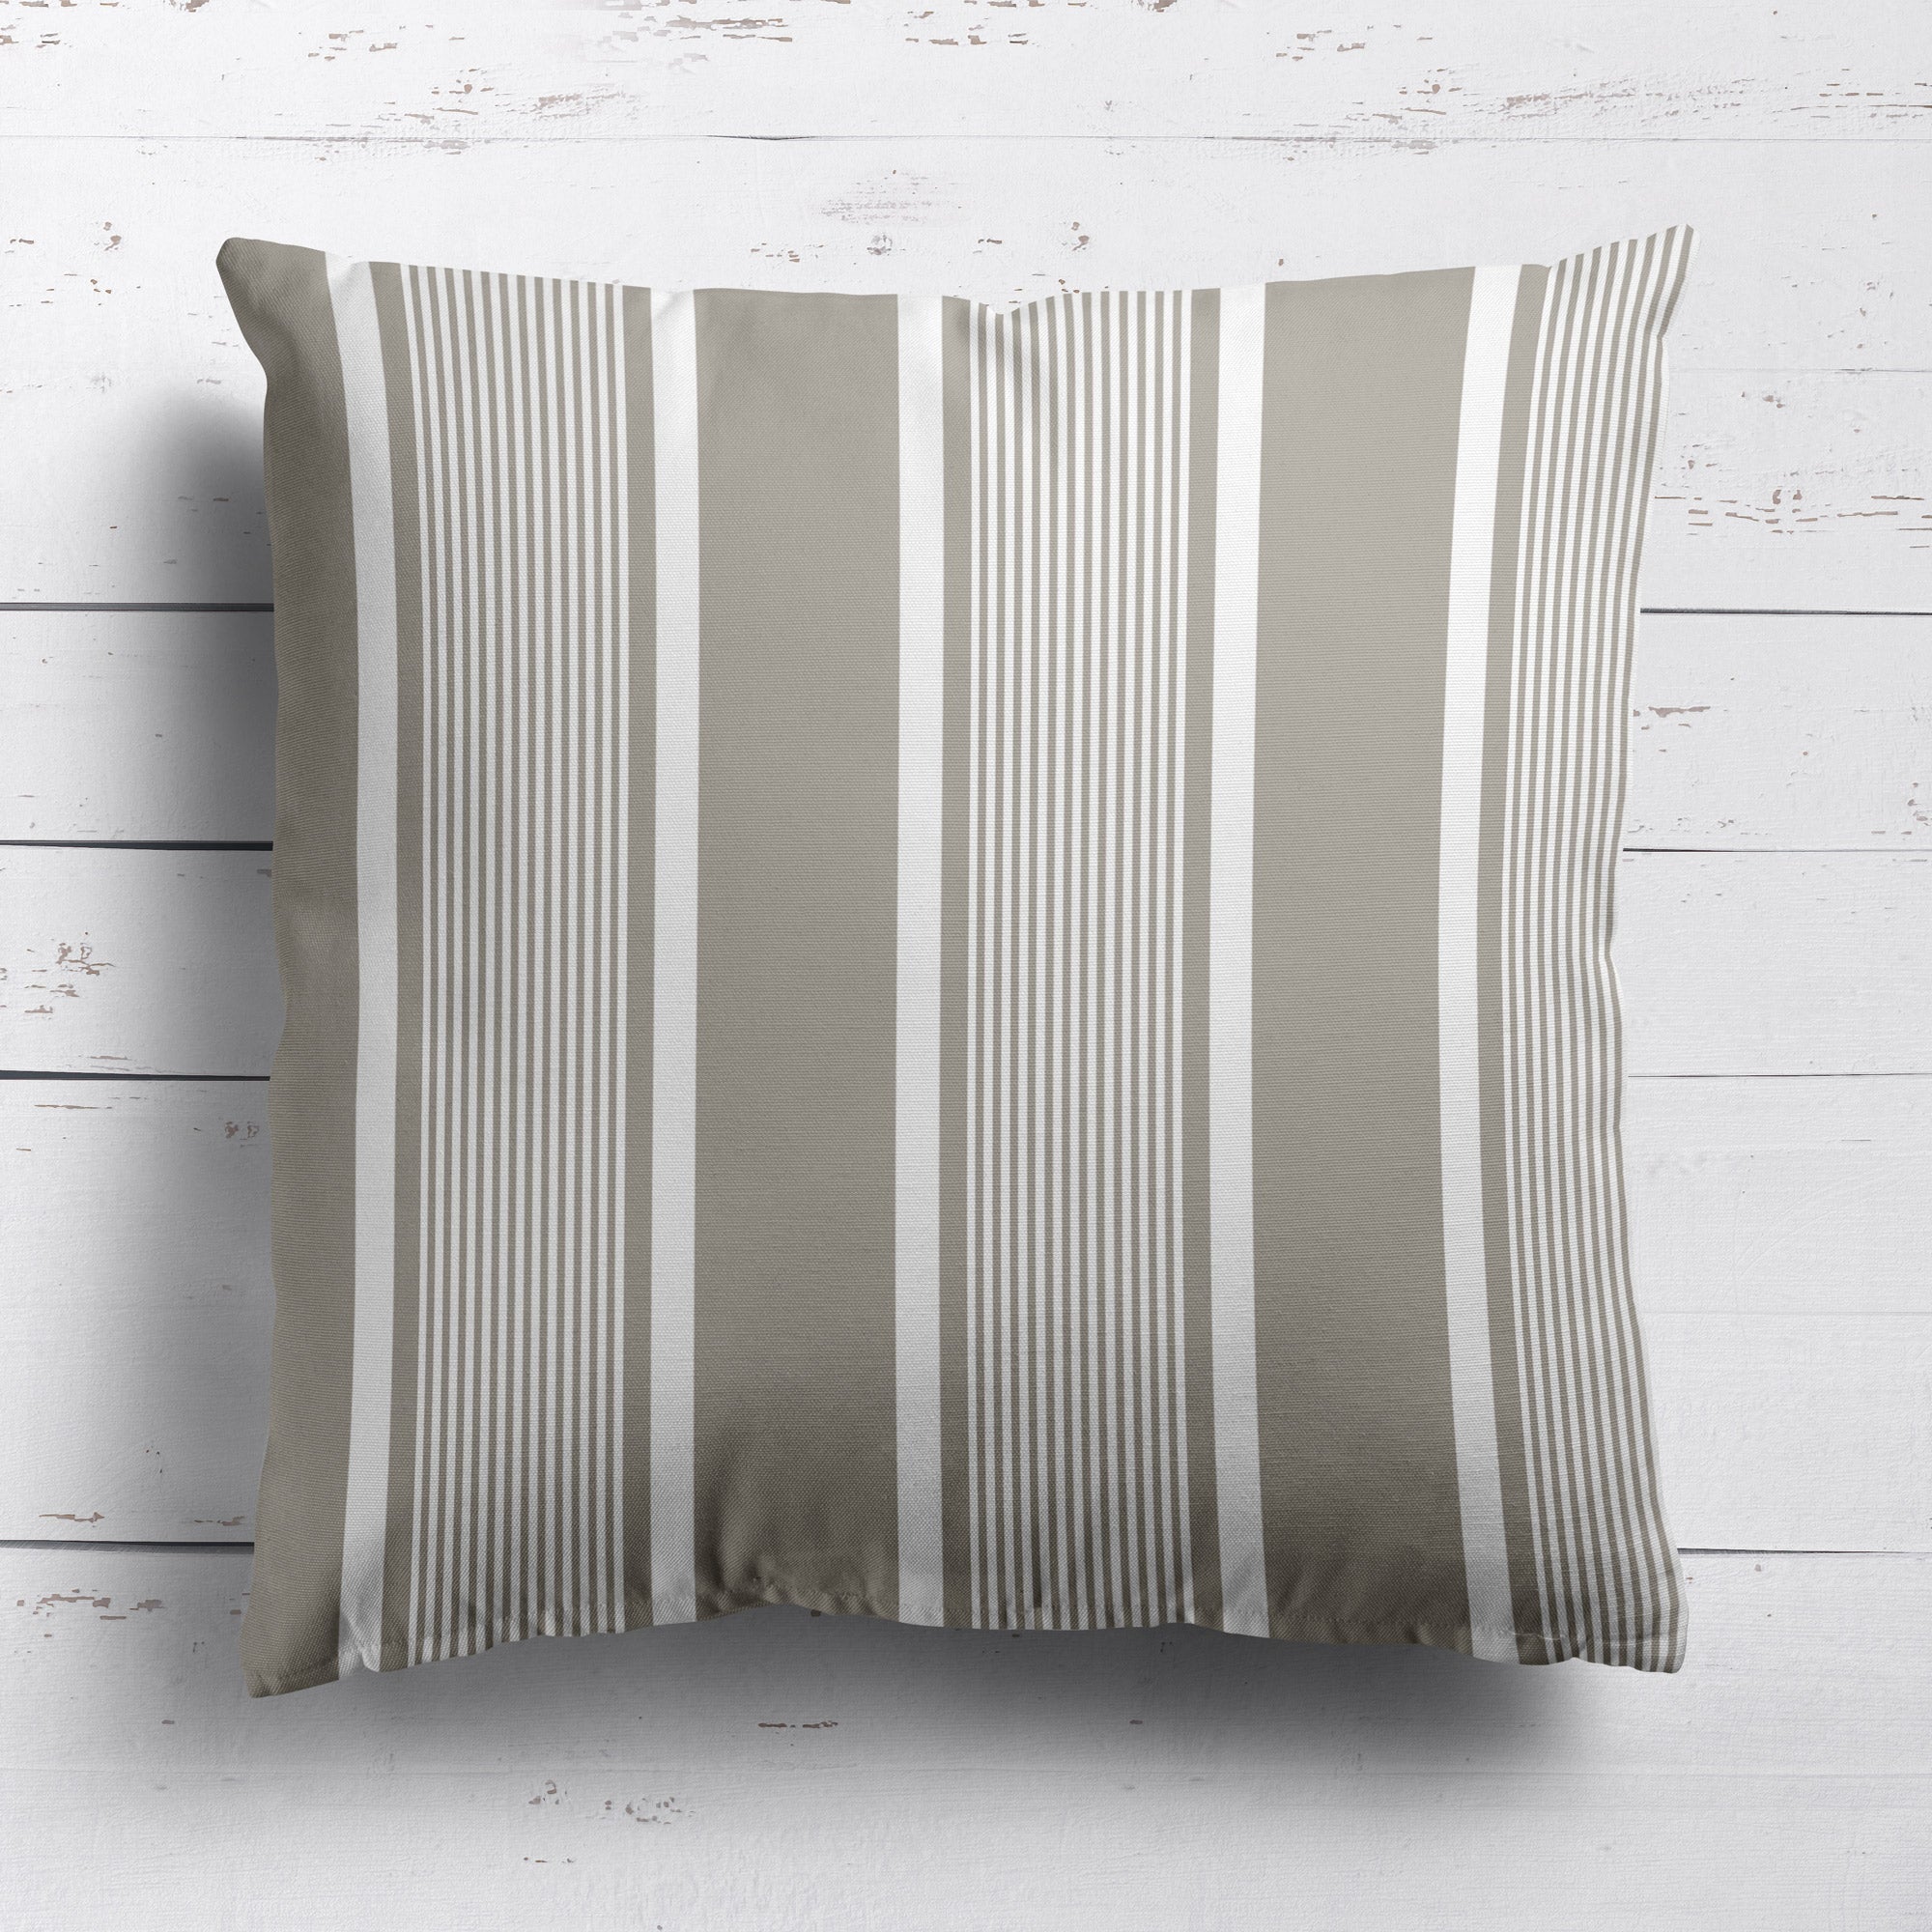 Deckchair Stripe Fabric - Chateaux - Hydrangea Lane Home